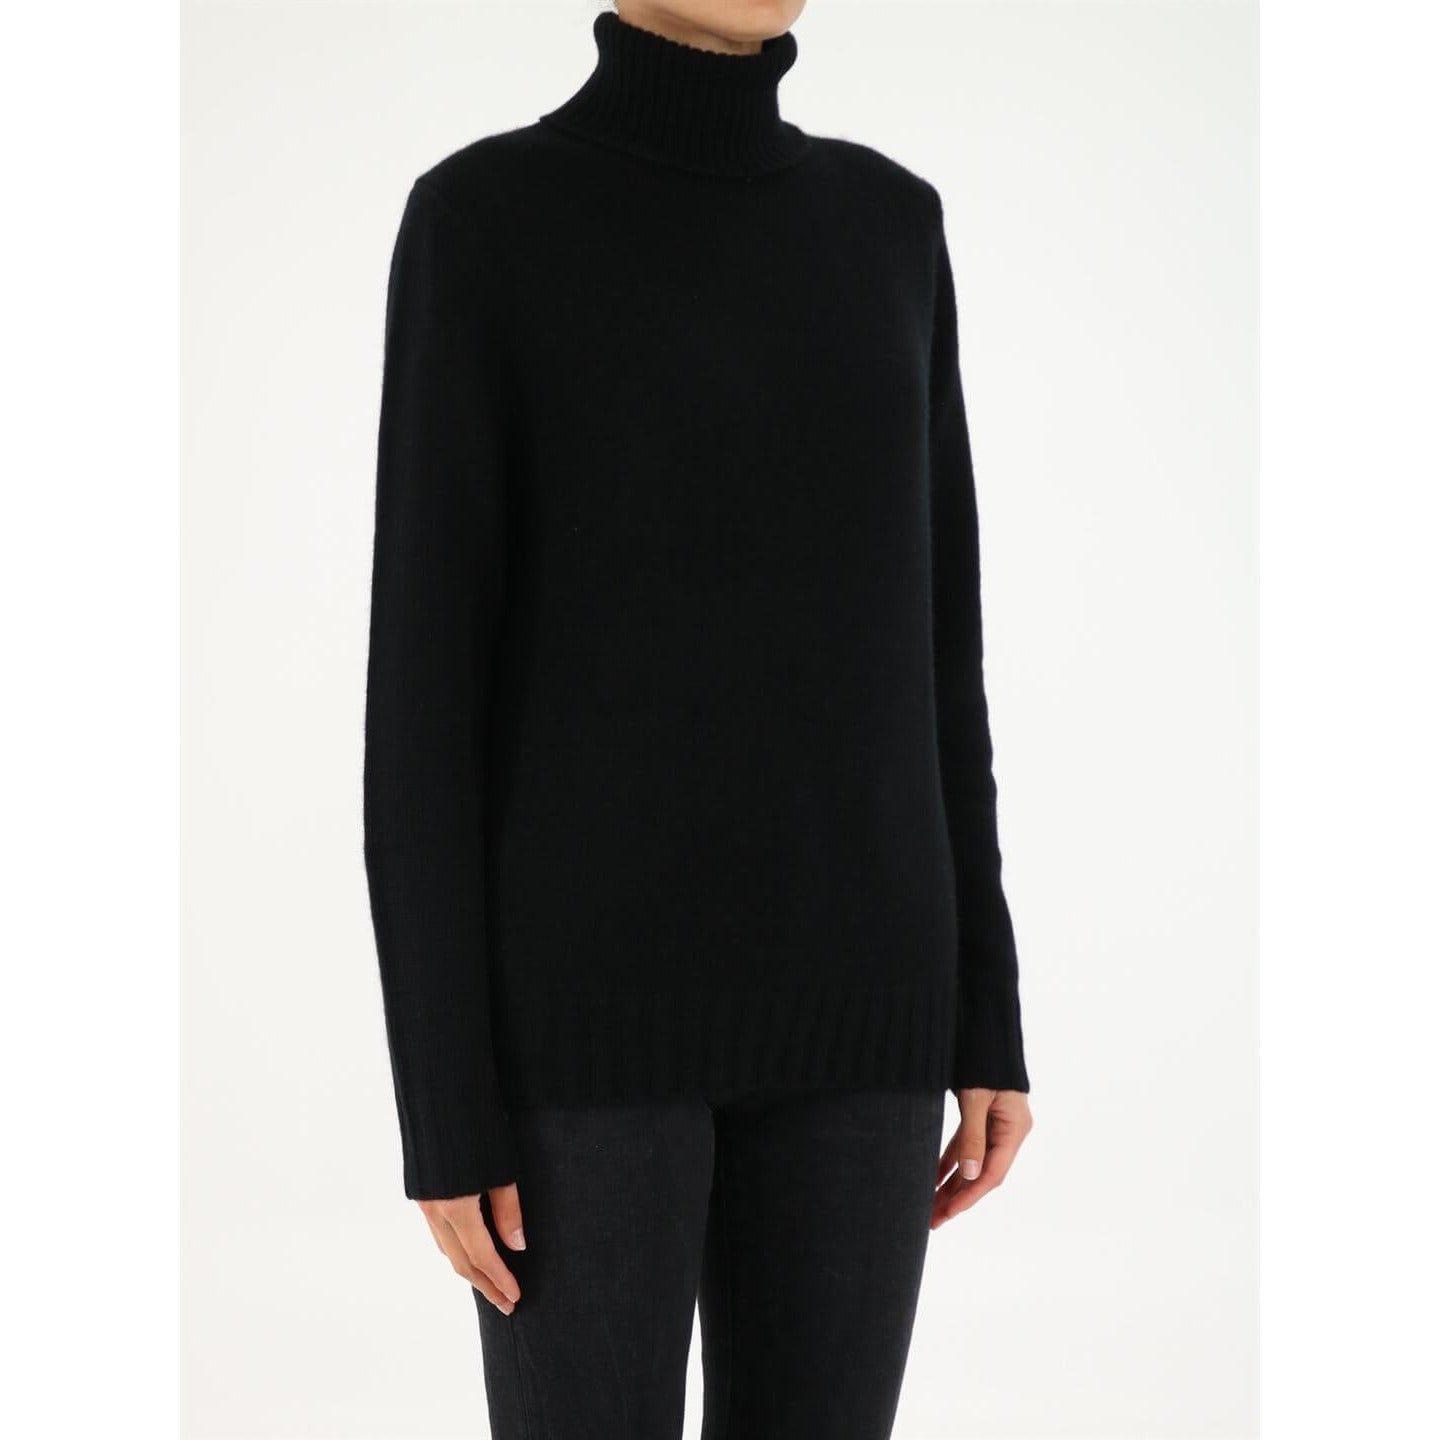 ALLUDE Allude Black Roll-Neck Cashmere Sweater WOMAN KNITWEAR allude-black-roll-neck-cashmere-sweater MjkyMjkx_9fb2cc72-fc13-4115-a766-6f724247963f.jpg